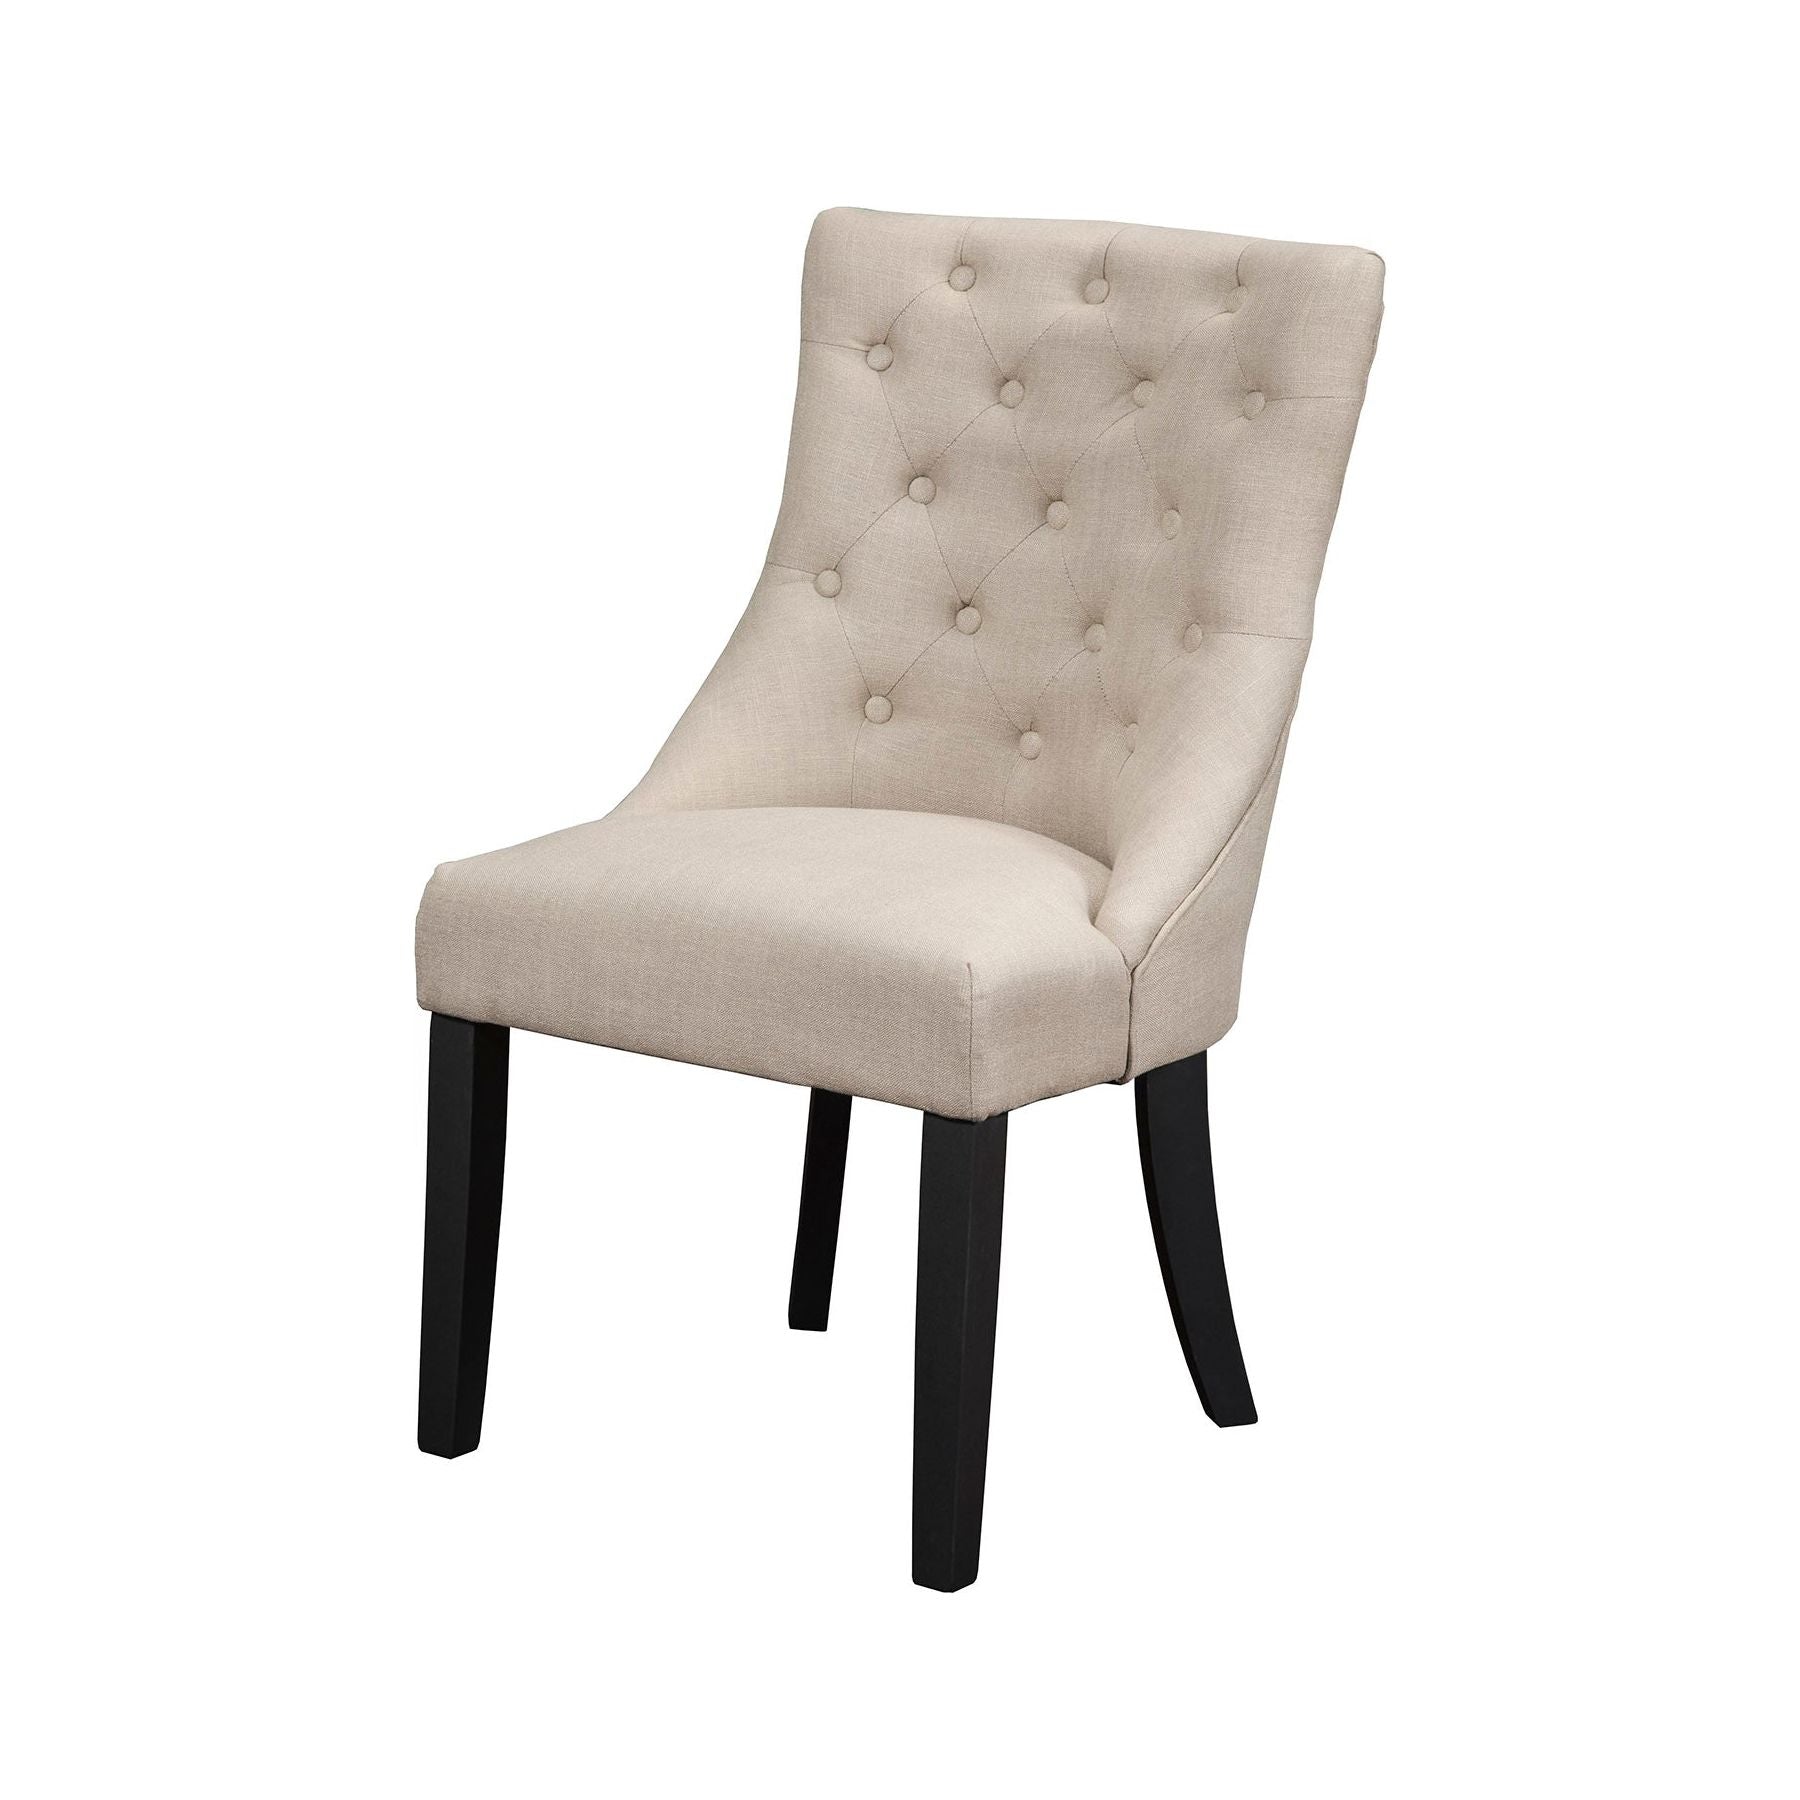 Prairie Upholstered Side Chairs, Cream Linen